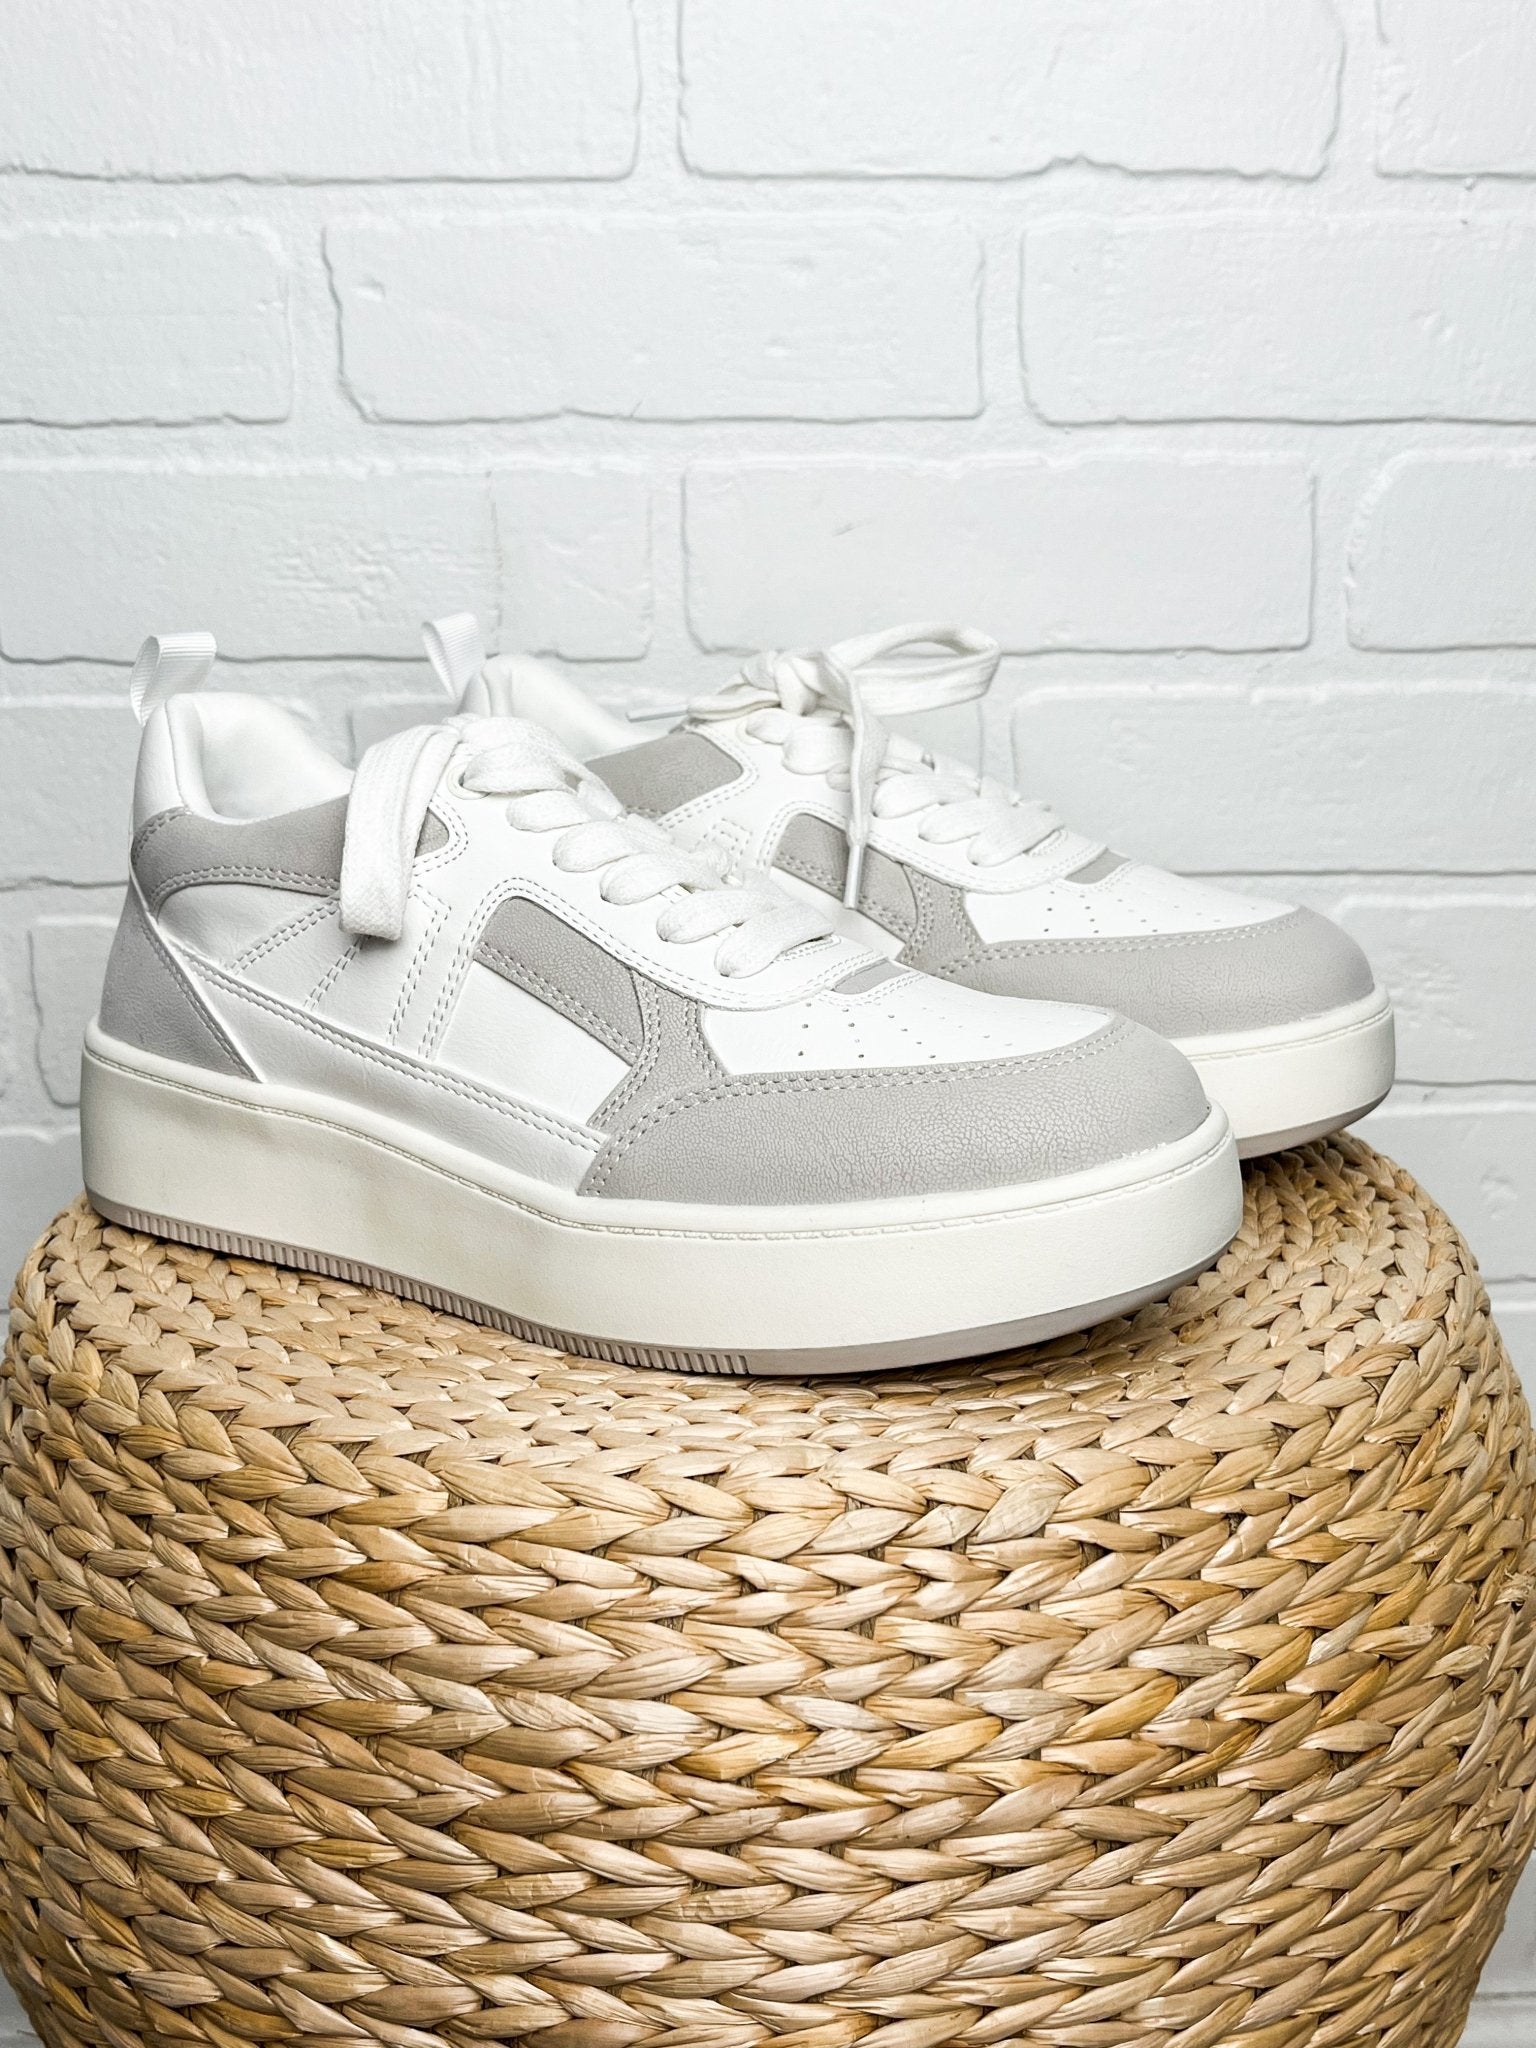 Malbru sneaker white - Trendy Shoes - Fashion Shoes at Lush Fashion Lounge Boutique in Oklahoma City